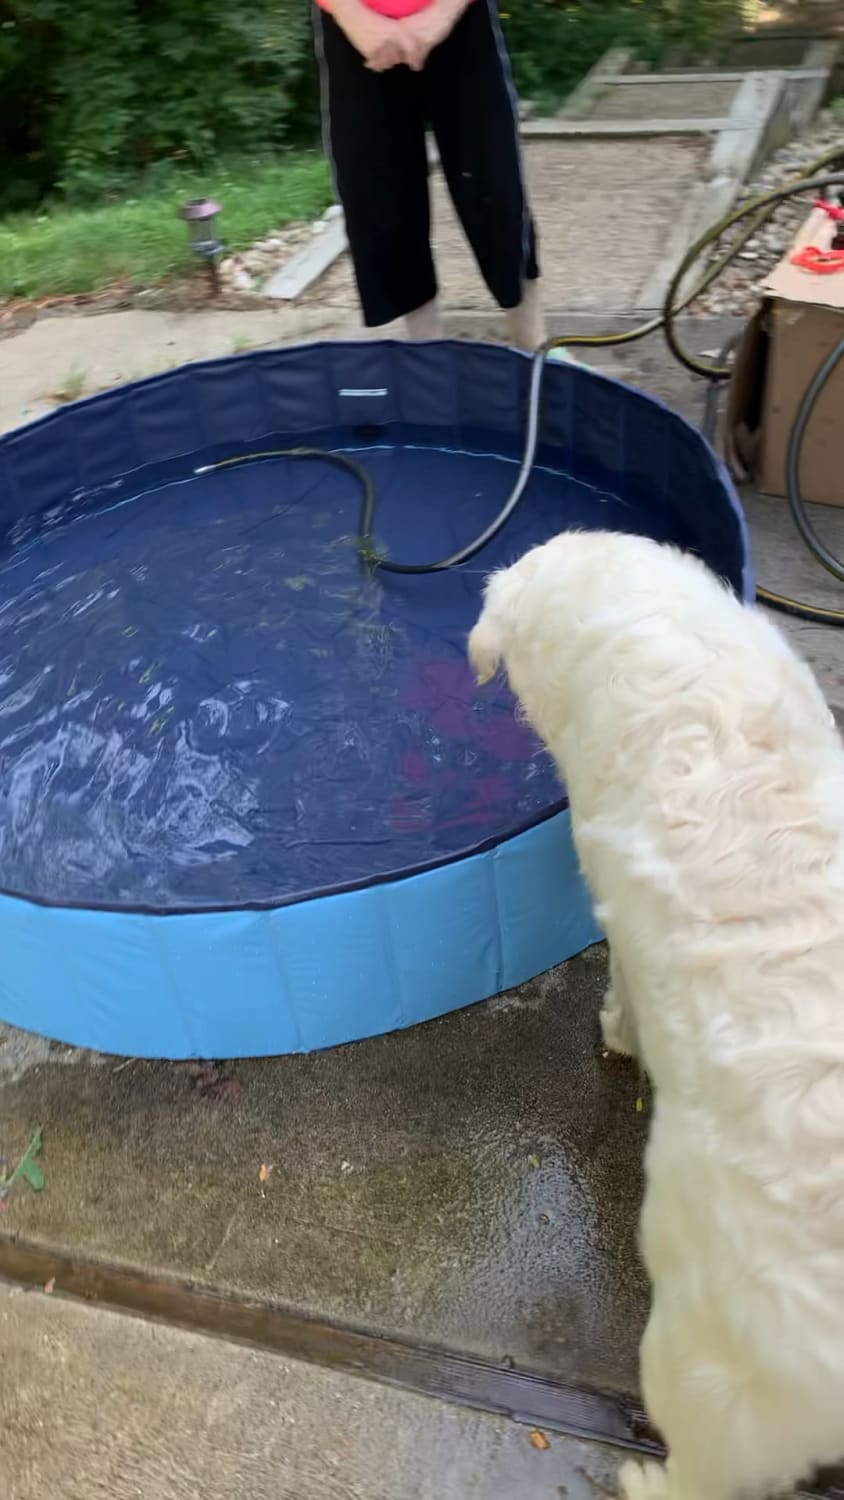 We got him a new doggy pool